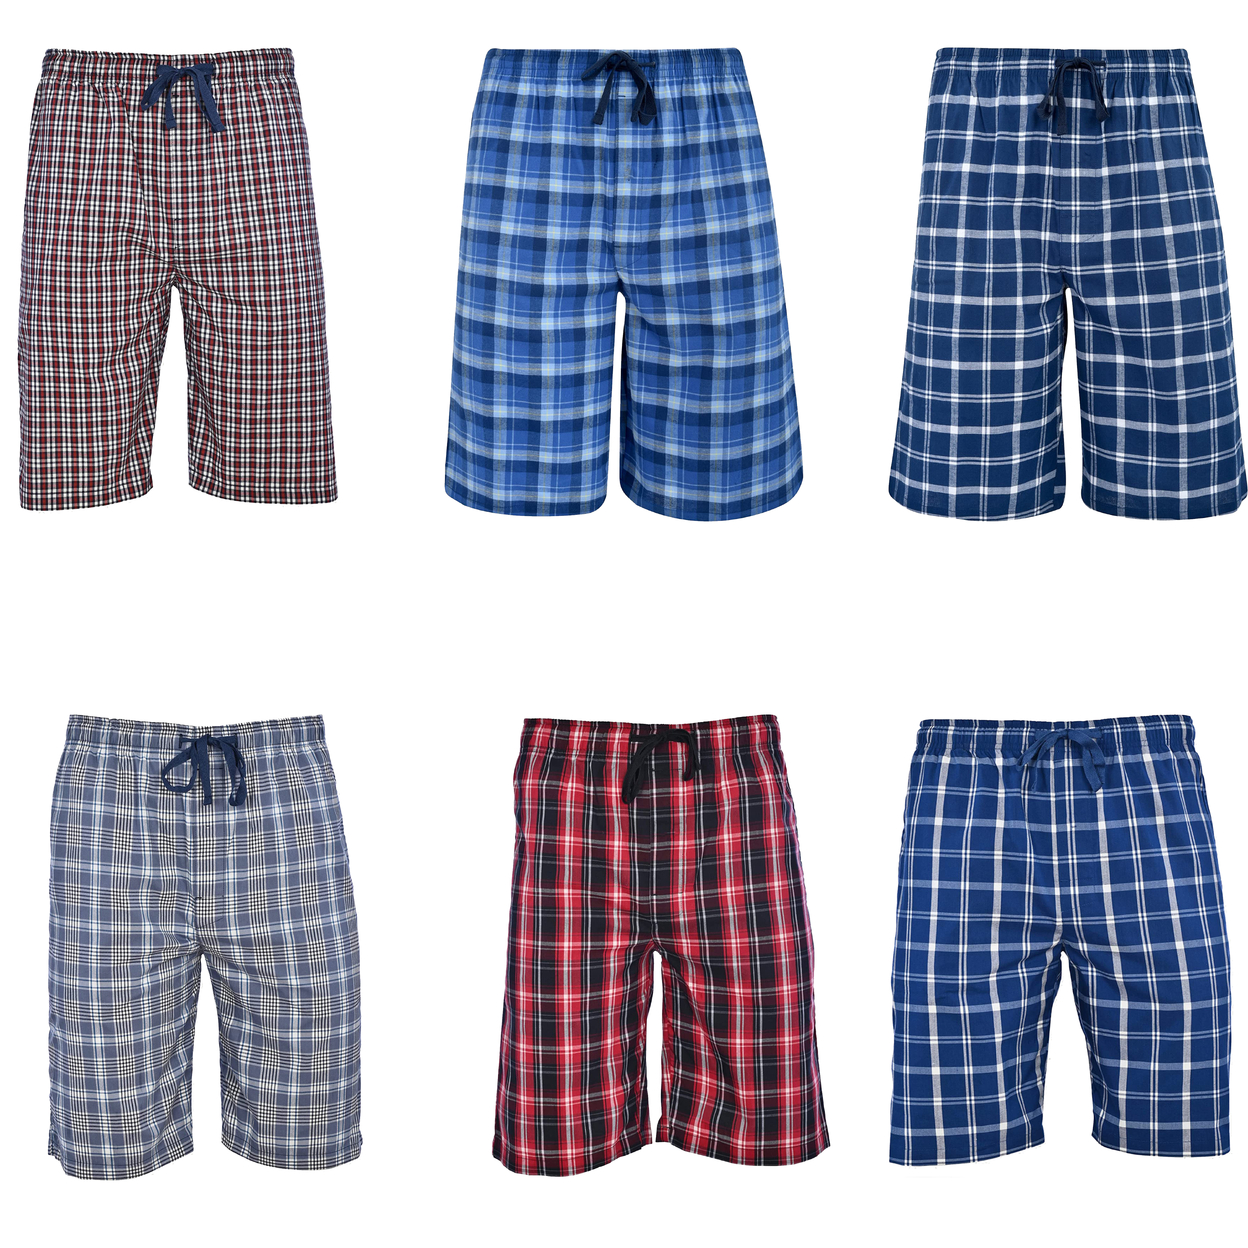 2-Pack: Men's Ultra Soft Plaid Lounge Pajama Sleep Wear Shorts - Black & Red, Medium